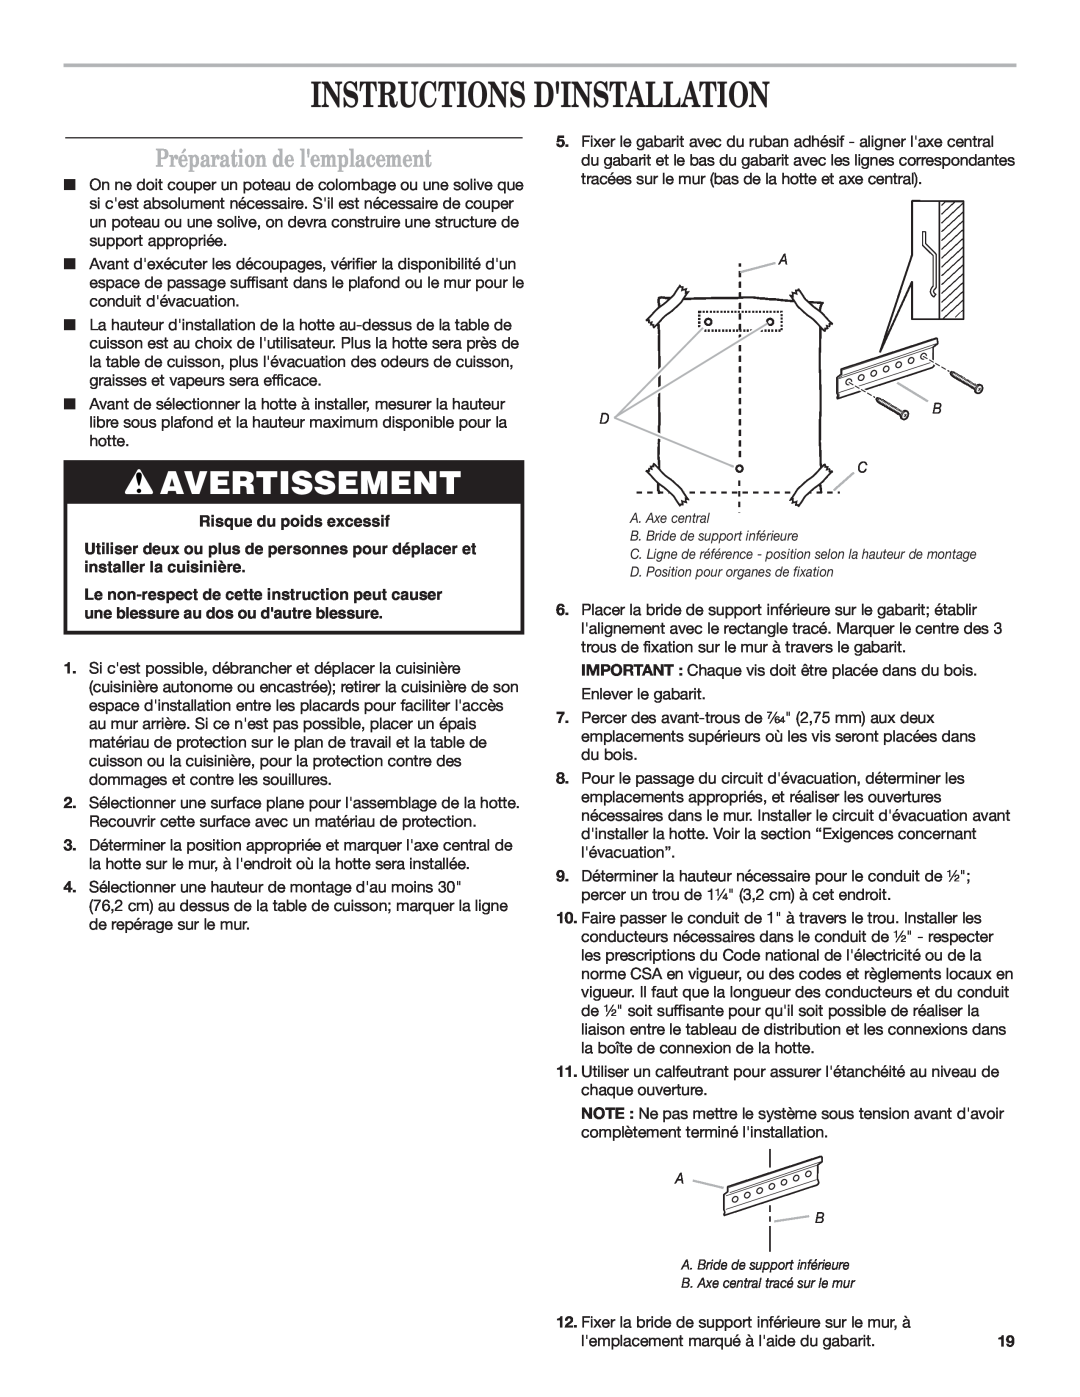 Whirlpool 19760268A Instructions Dinstallation, Préparation de lemplacement, Risque du poids excessif, Avertissement 